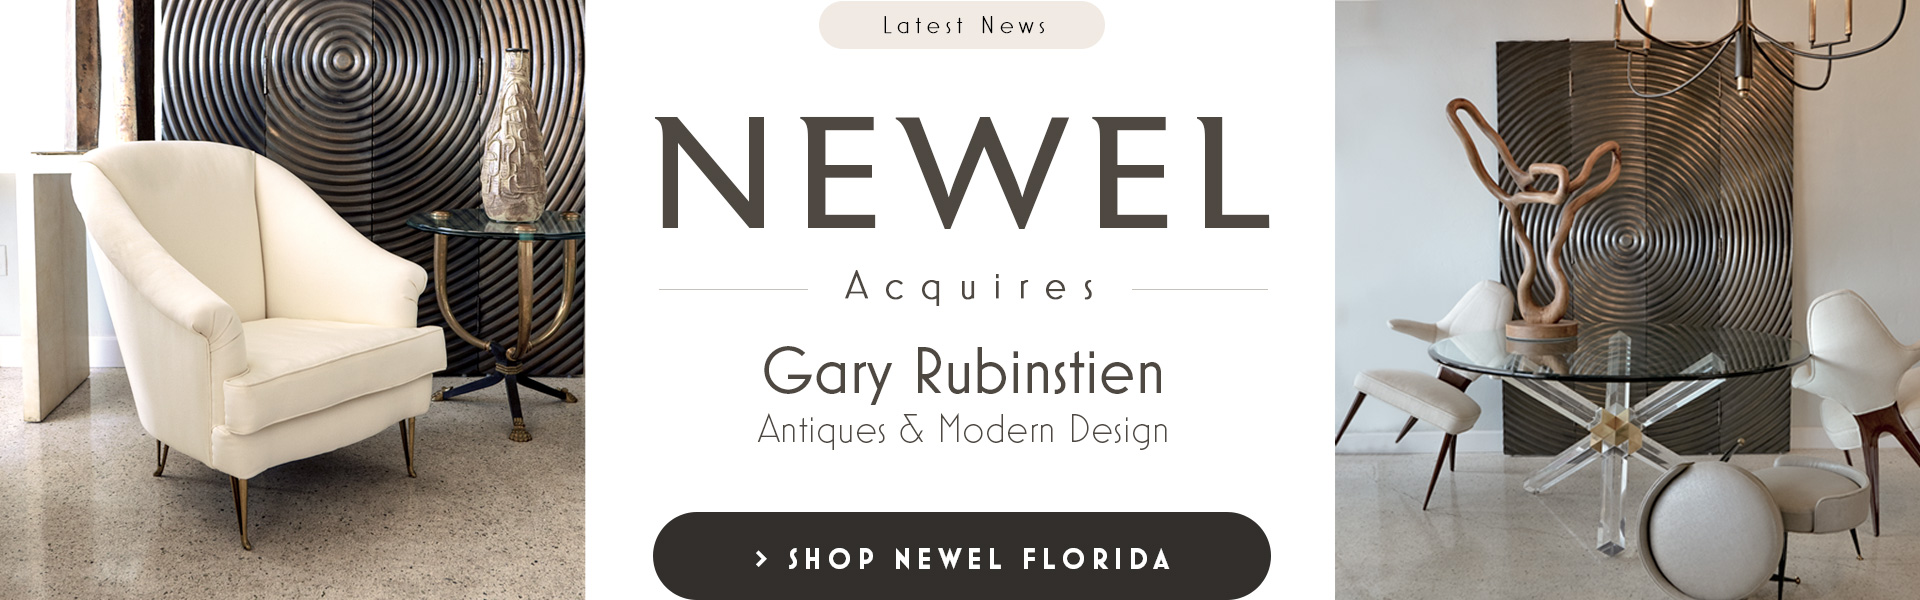 Newel acquires Gary Rubinstein